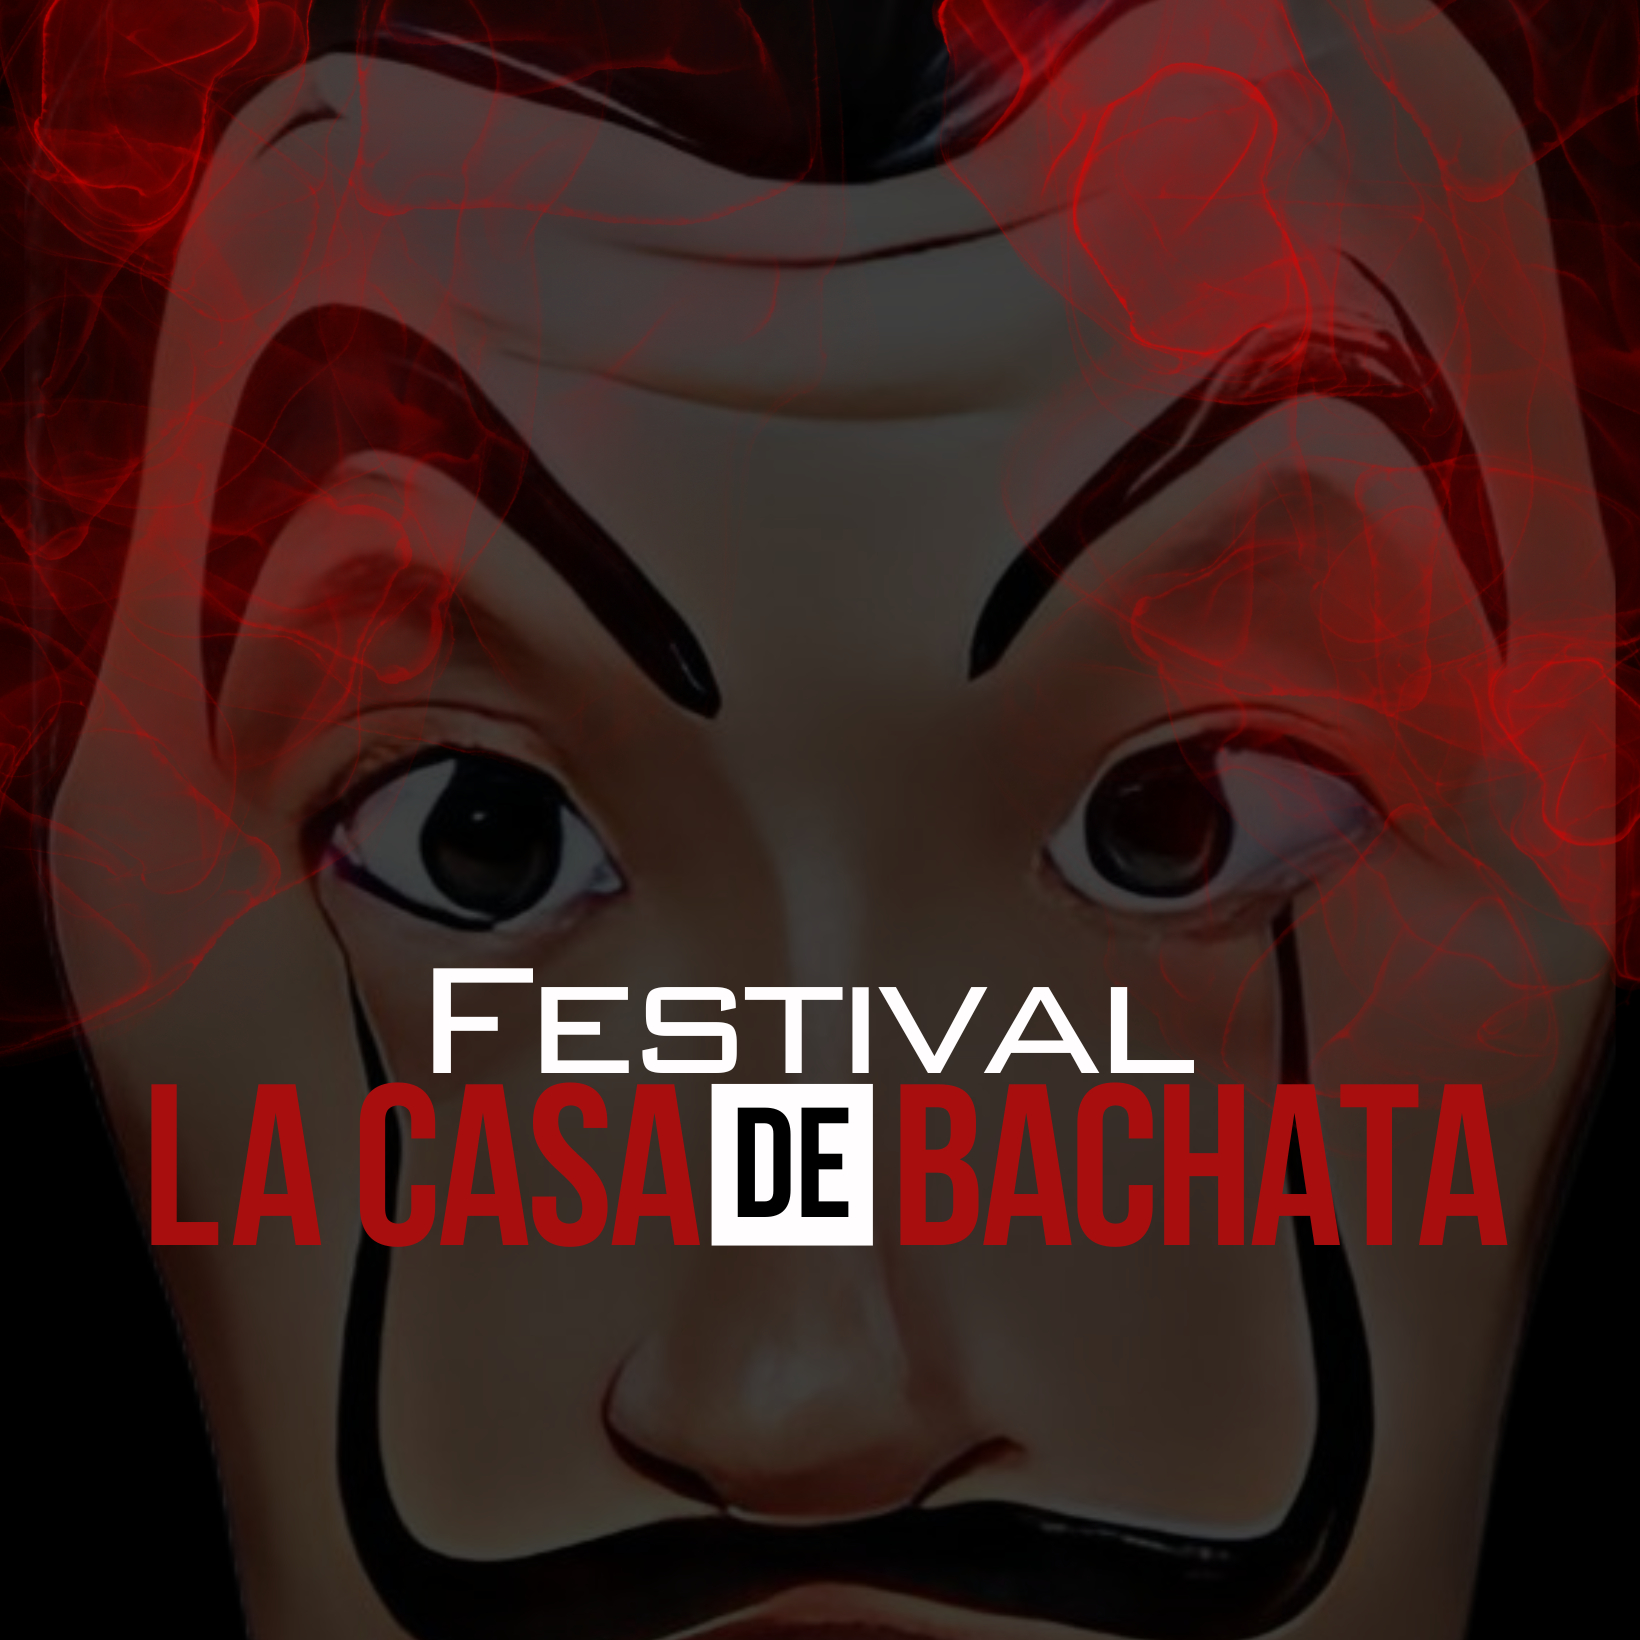 La Casa de Bachata by DP Events